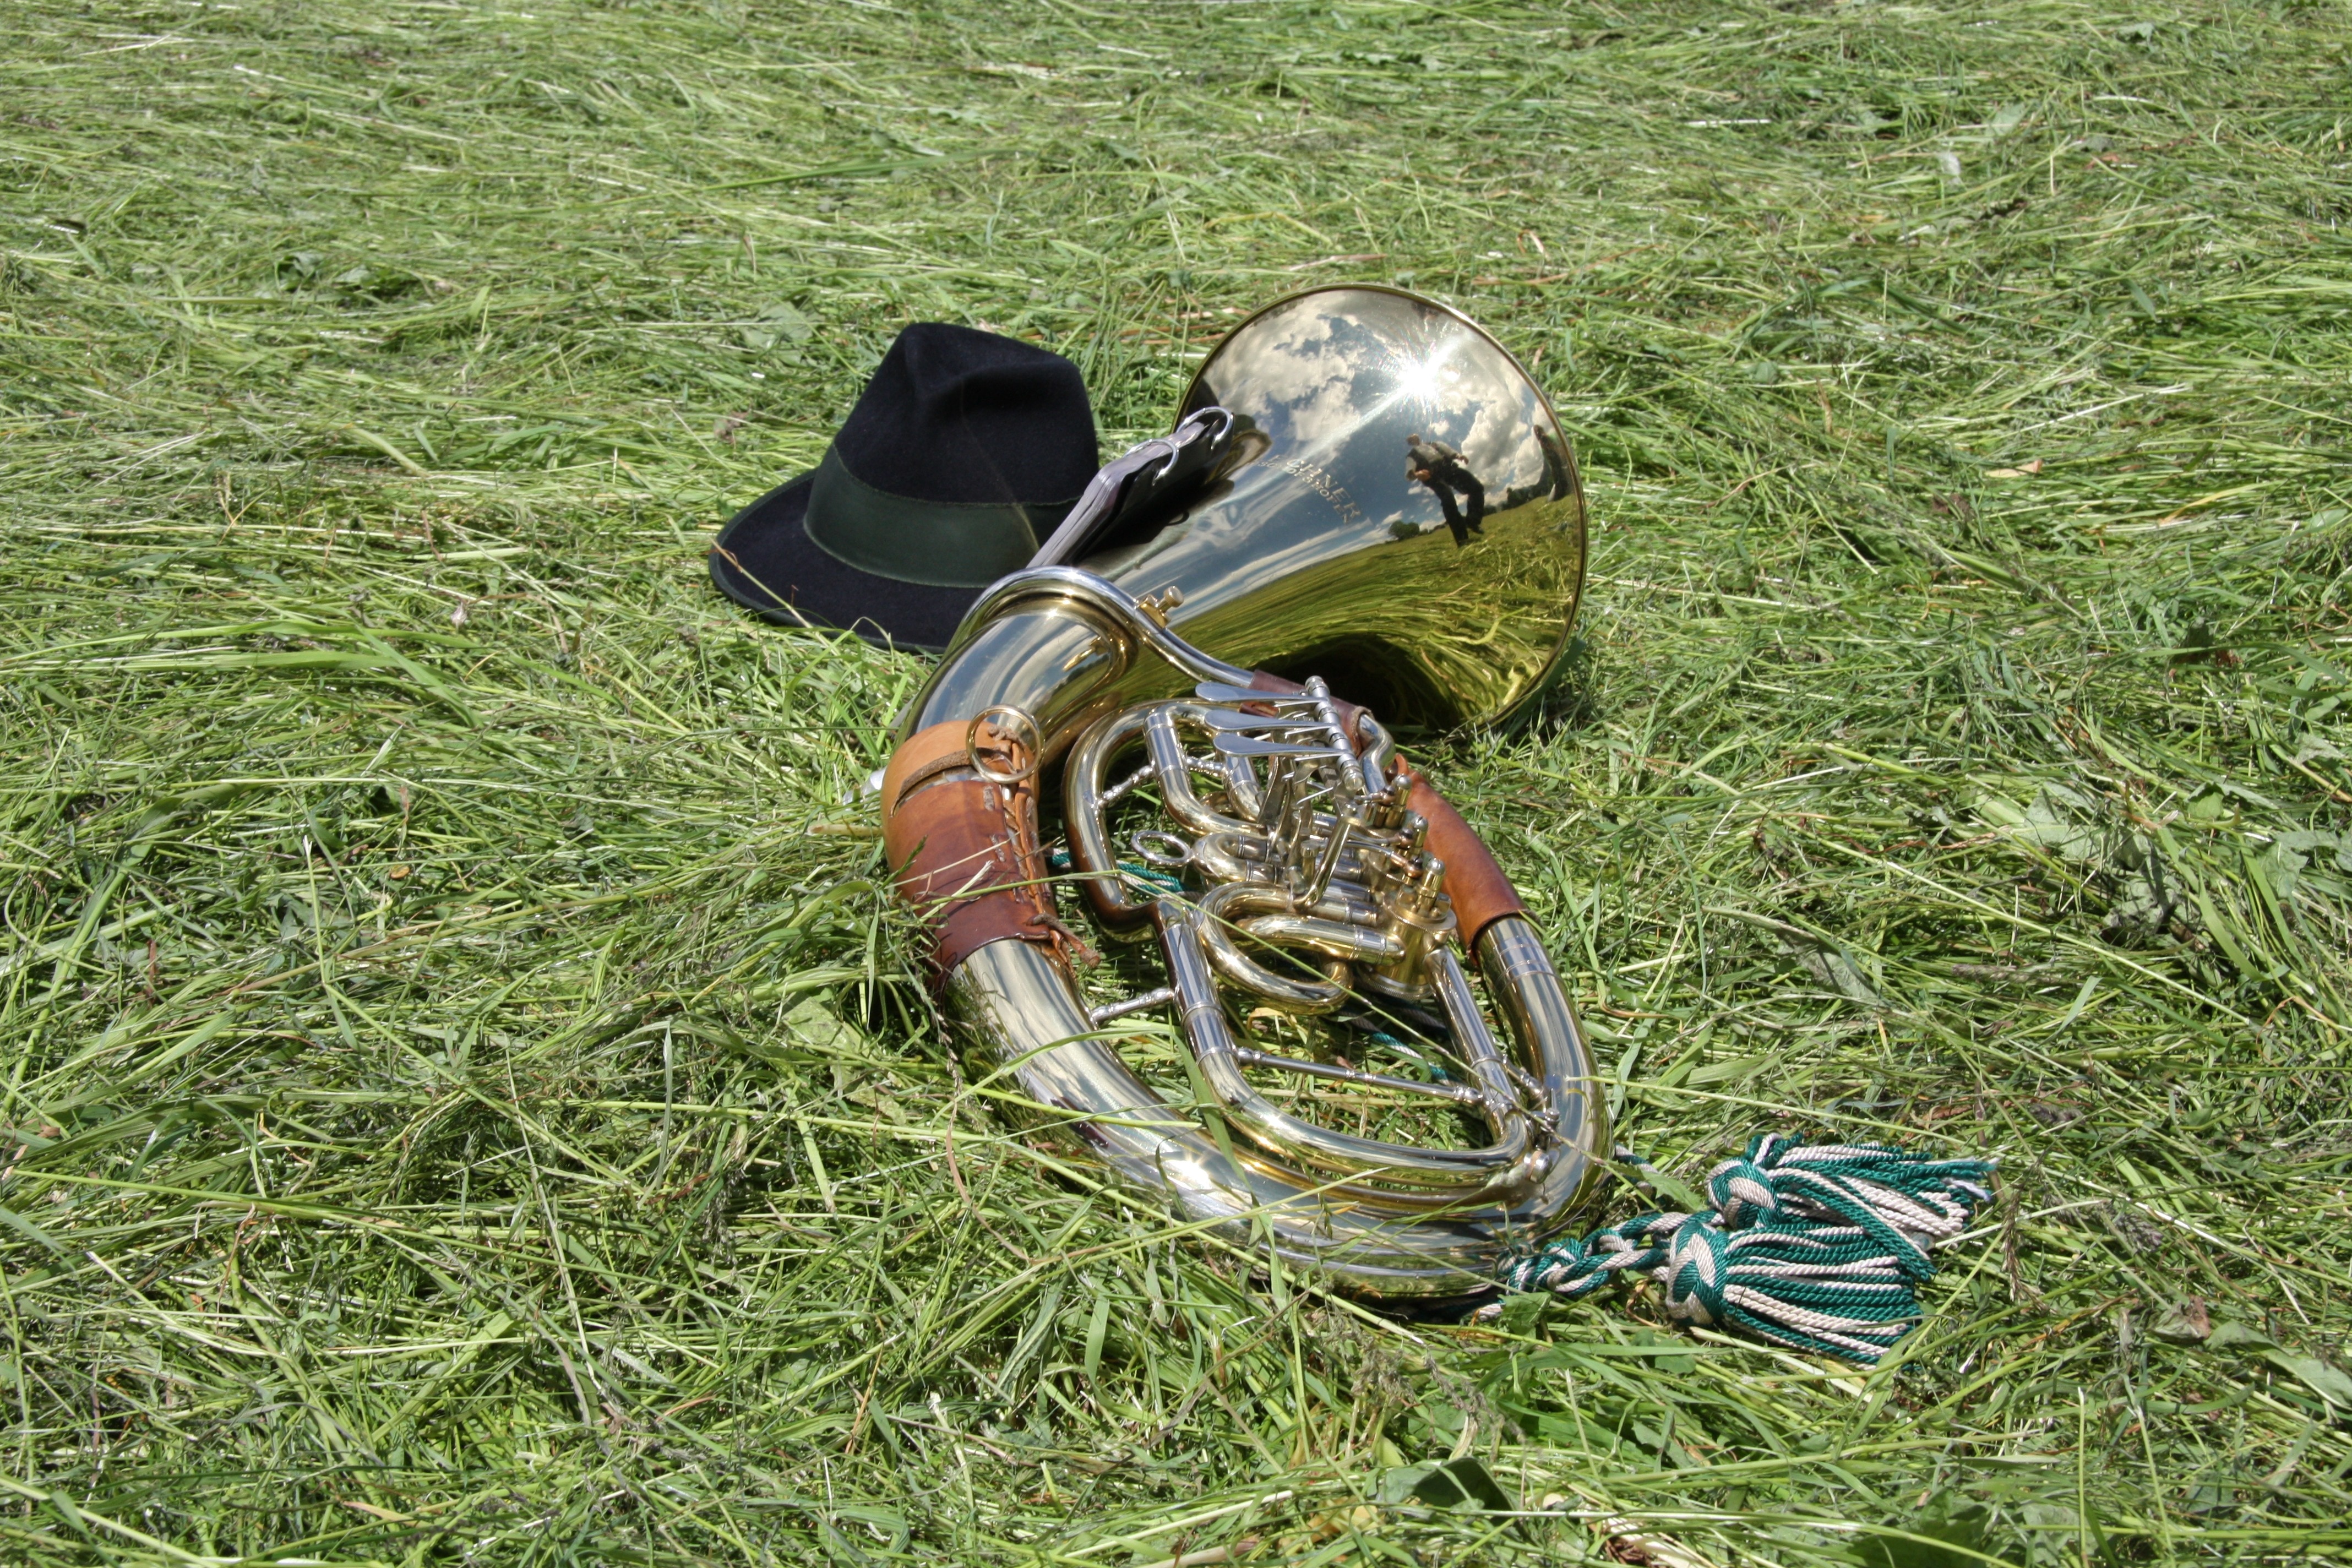 brass French horn beside a black fedora hat in grass ground